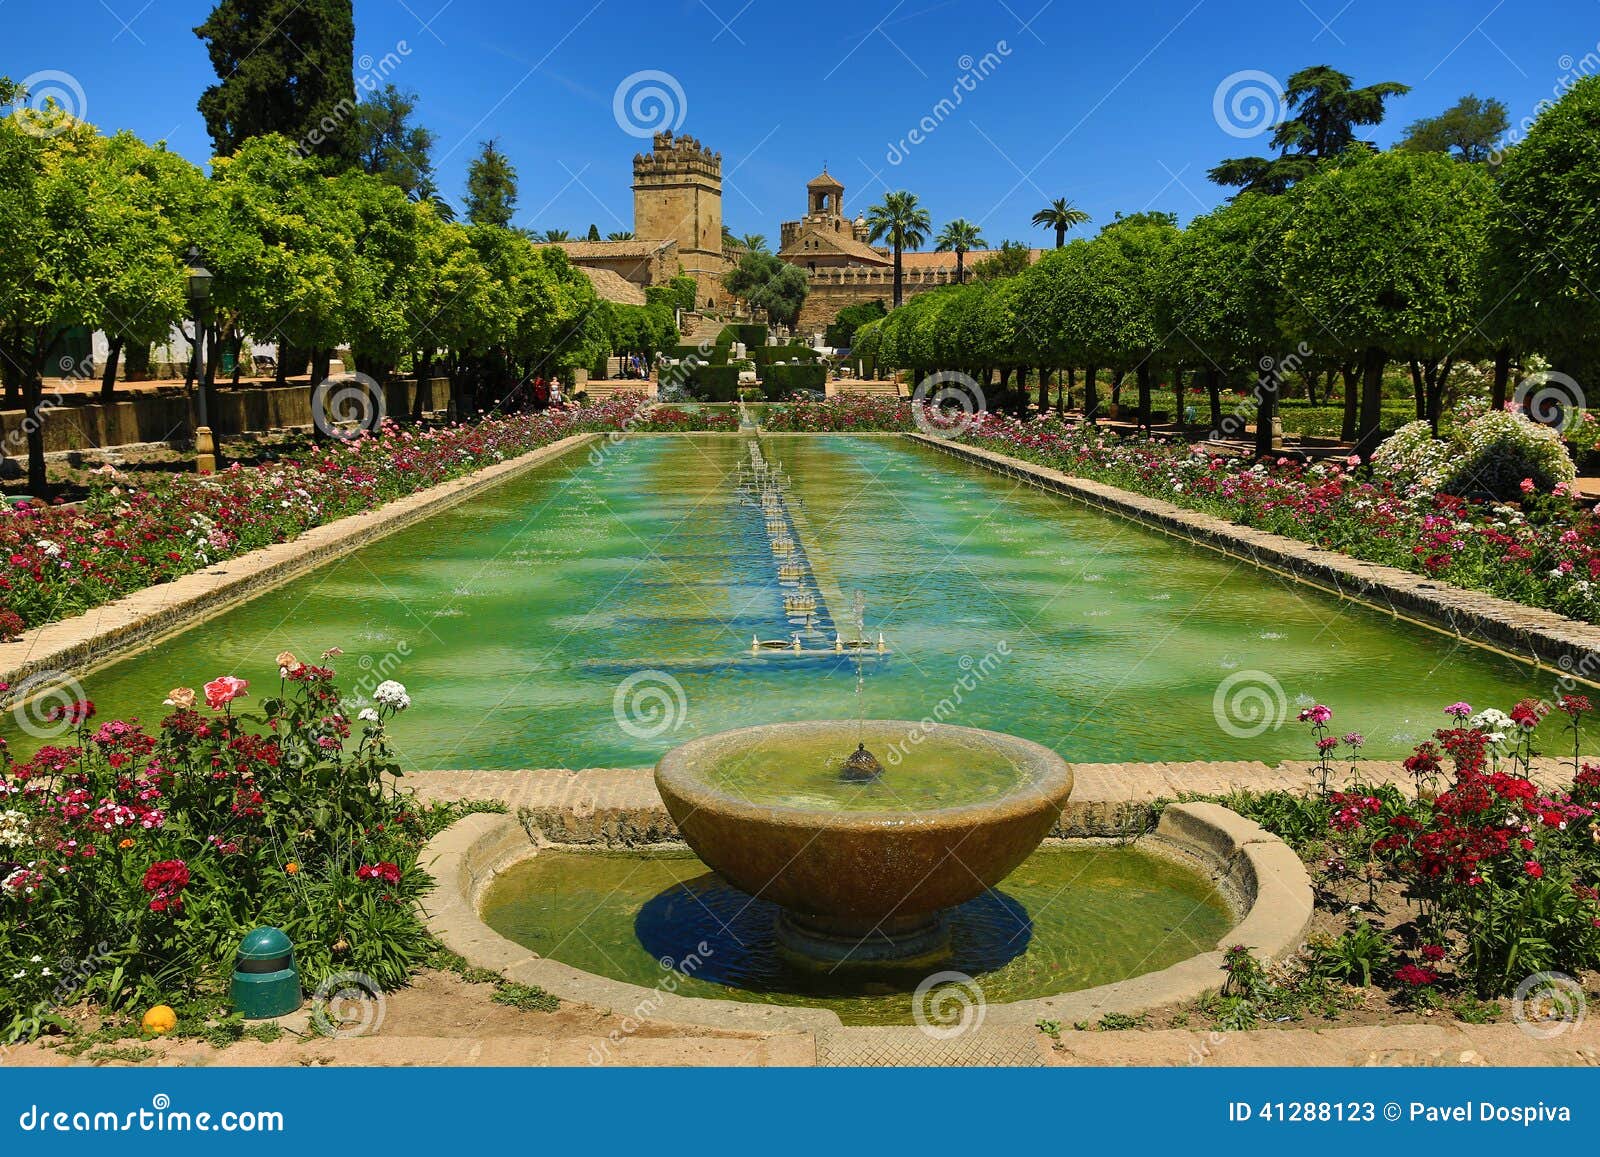 gardens of alcazar de los reyes cristianos, cordoba, spain. the place is declared unesco world heritage site. cordoba, spain